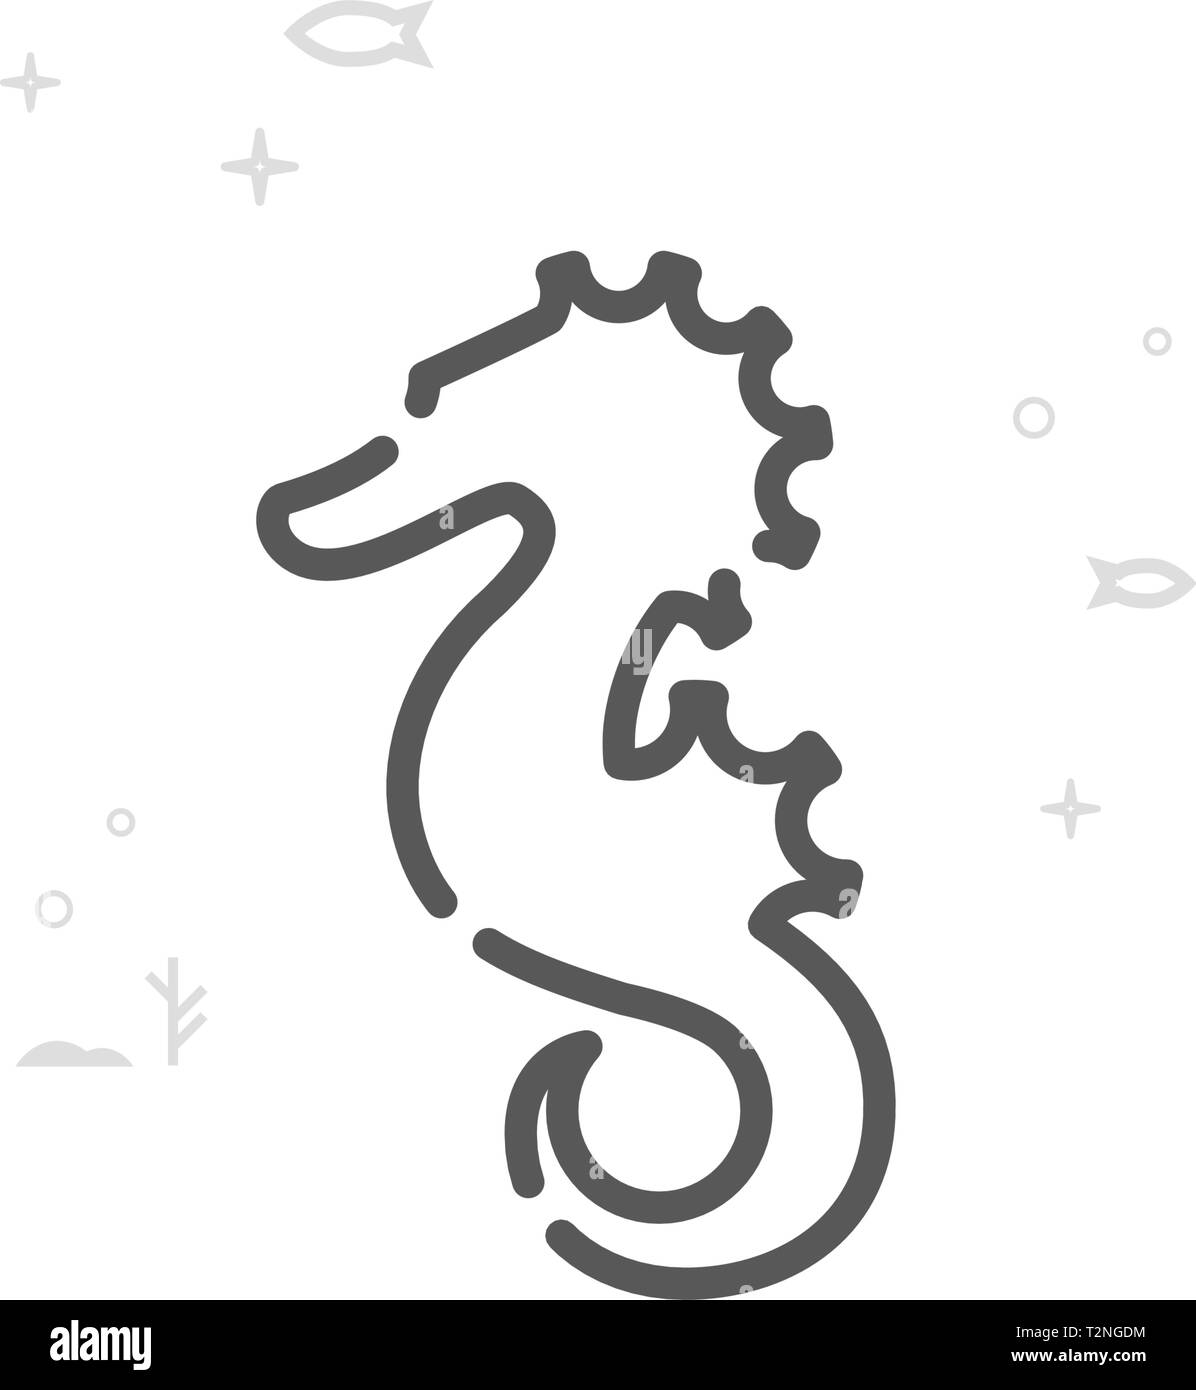 Hippocampus, Seahorse Vector Line Icon. Marine Life, Sea Creatures Symbol, Pictogram, Sign. Light Abstract Geometric Background. Editable Stroke. Stock Vector